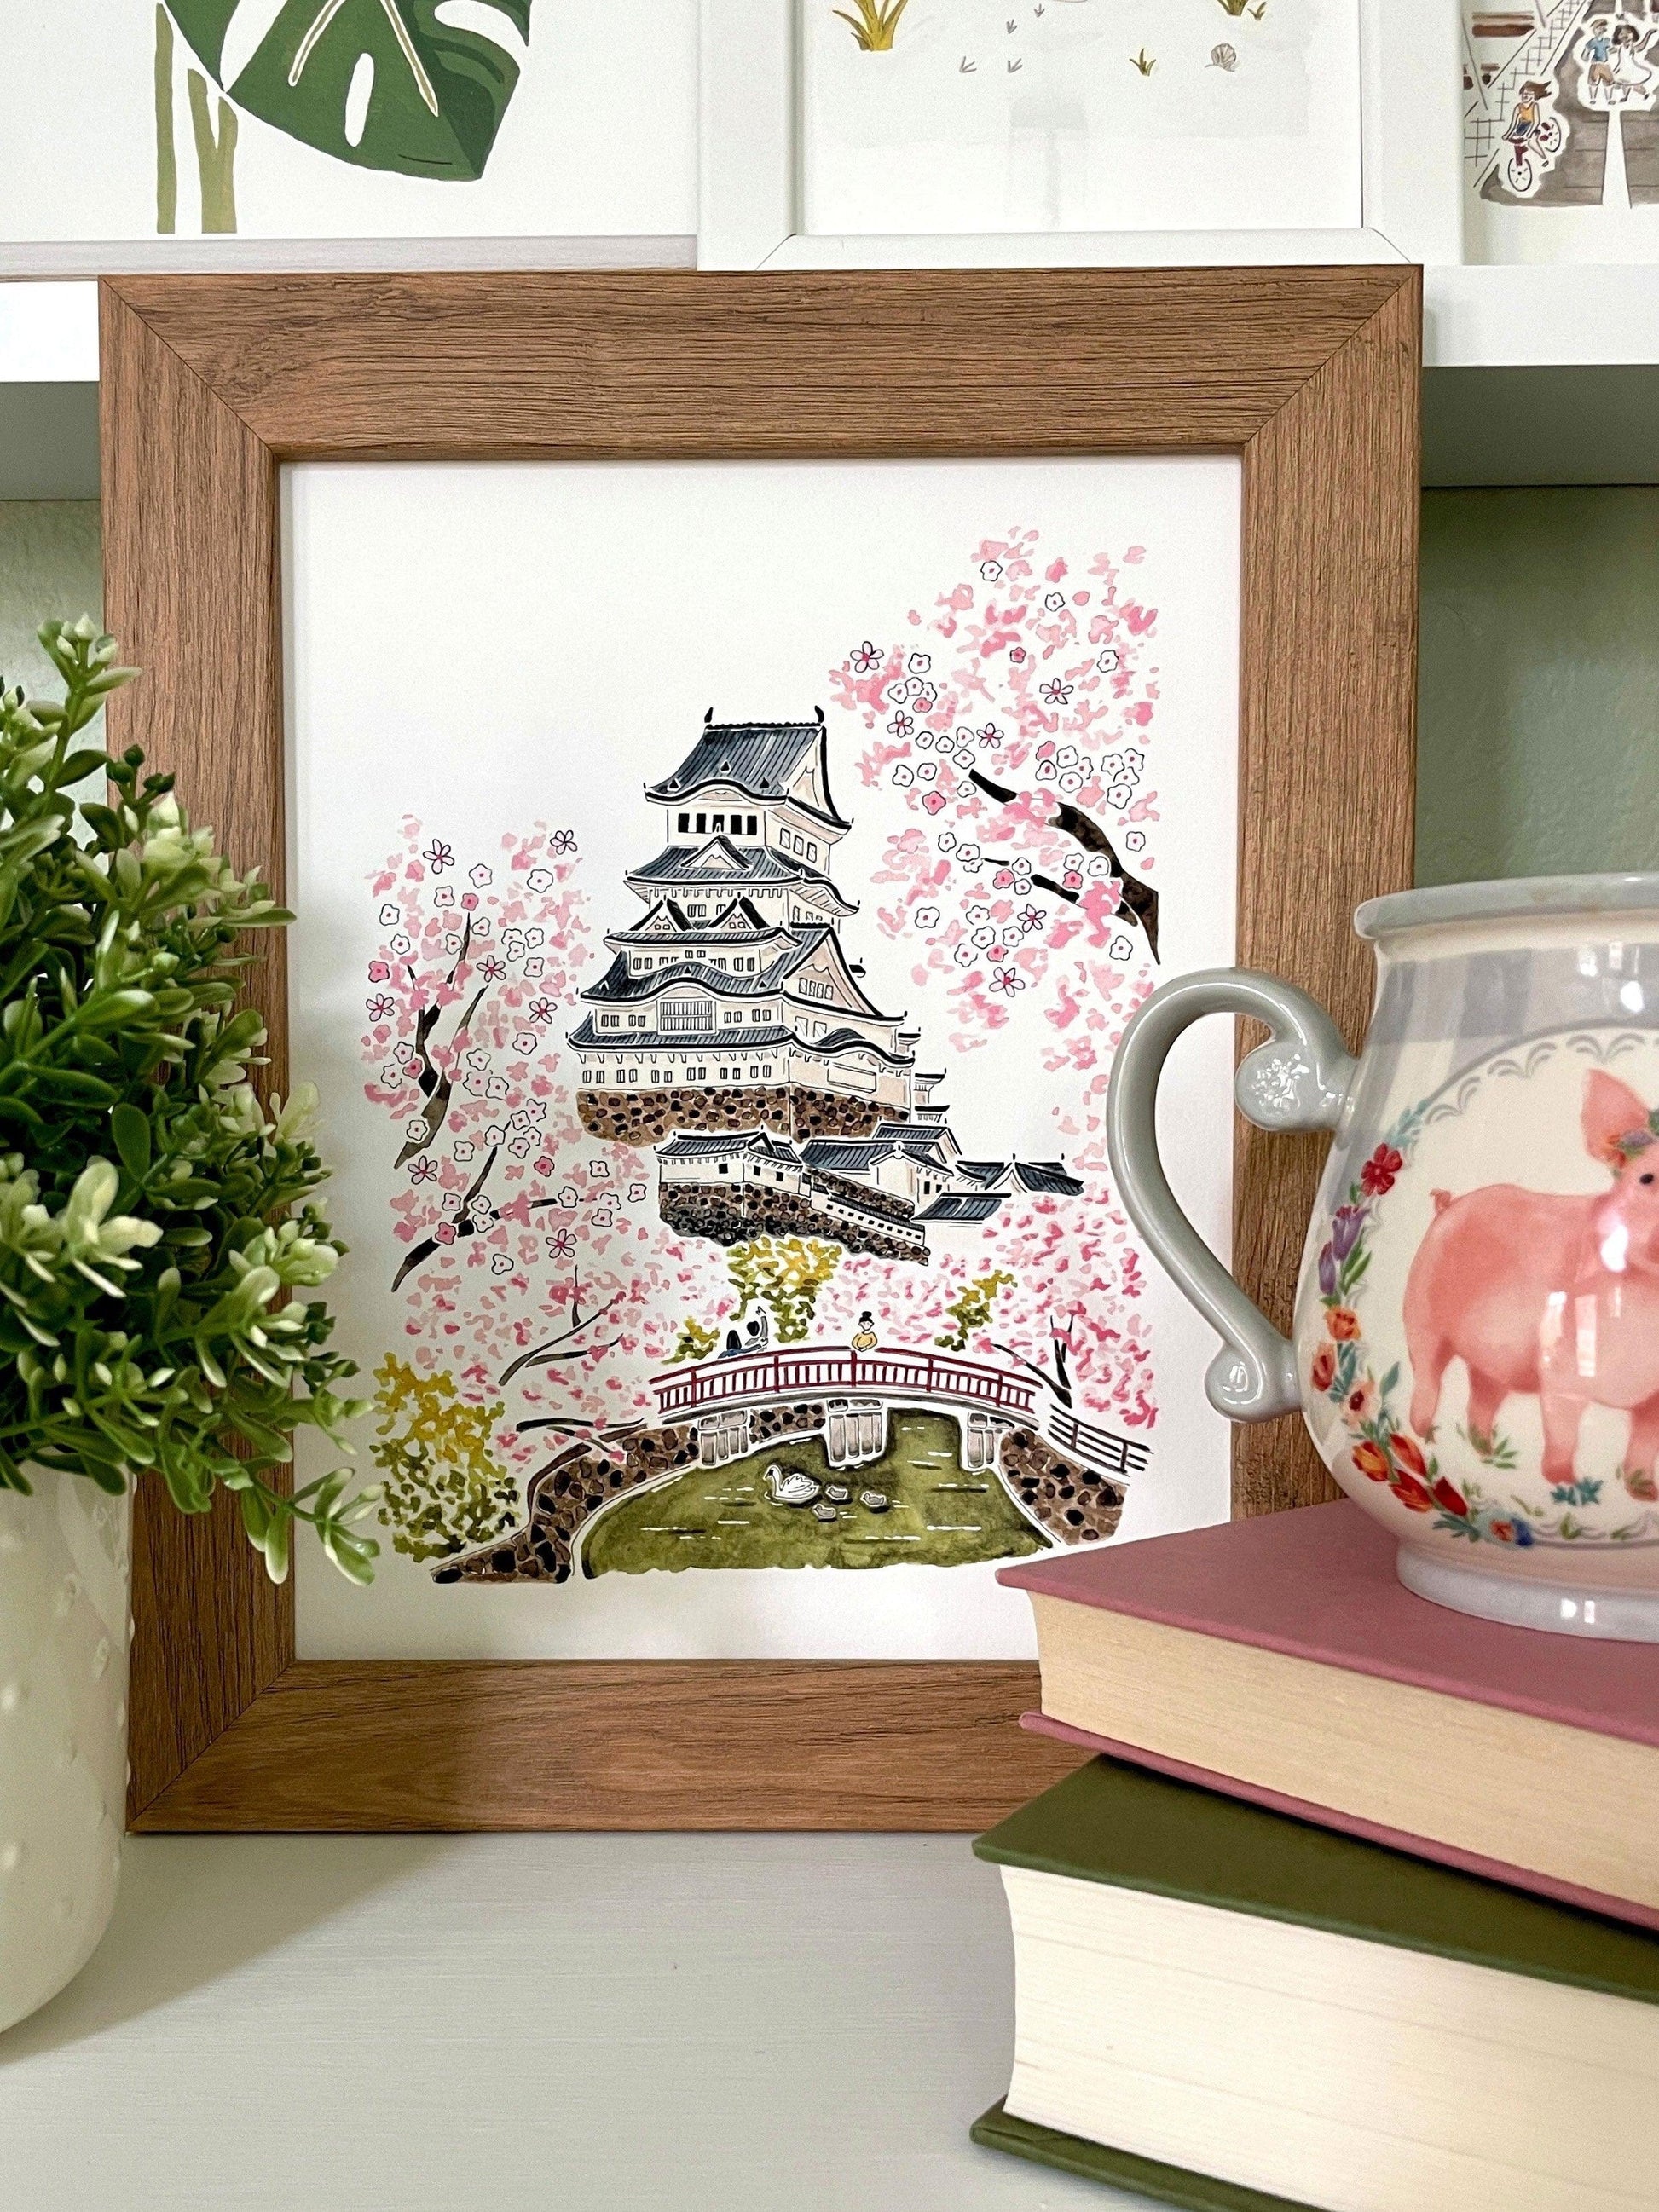 Tokyo (Japan) 5x7 Watercolor Print - Lilyvine Design